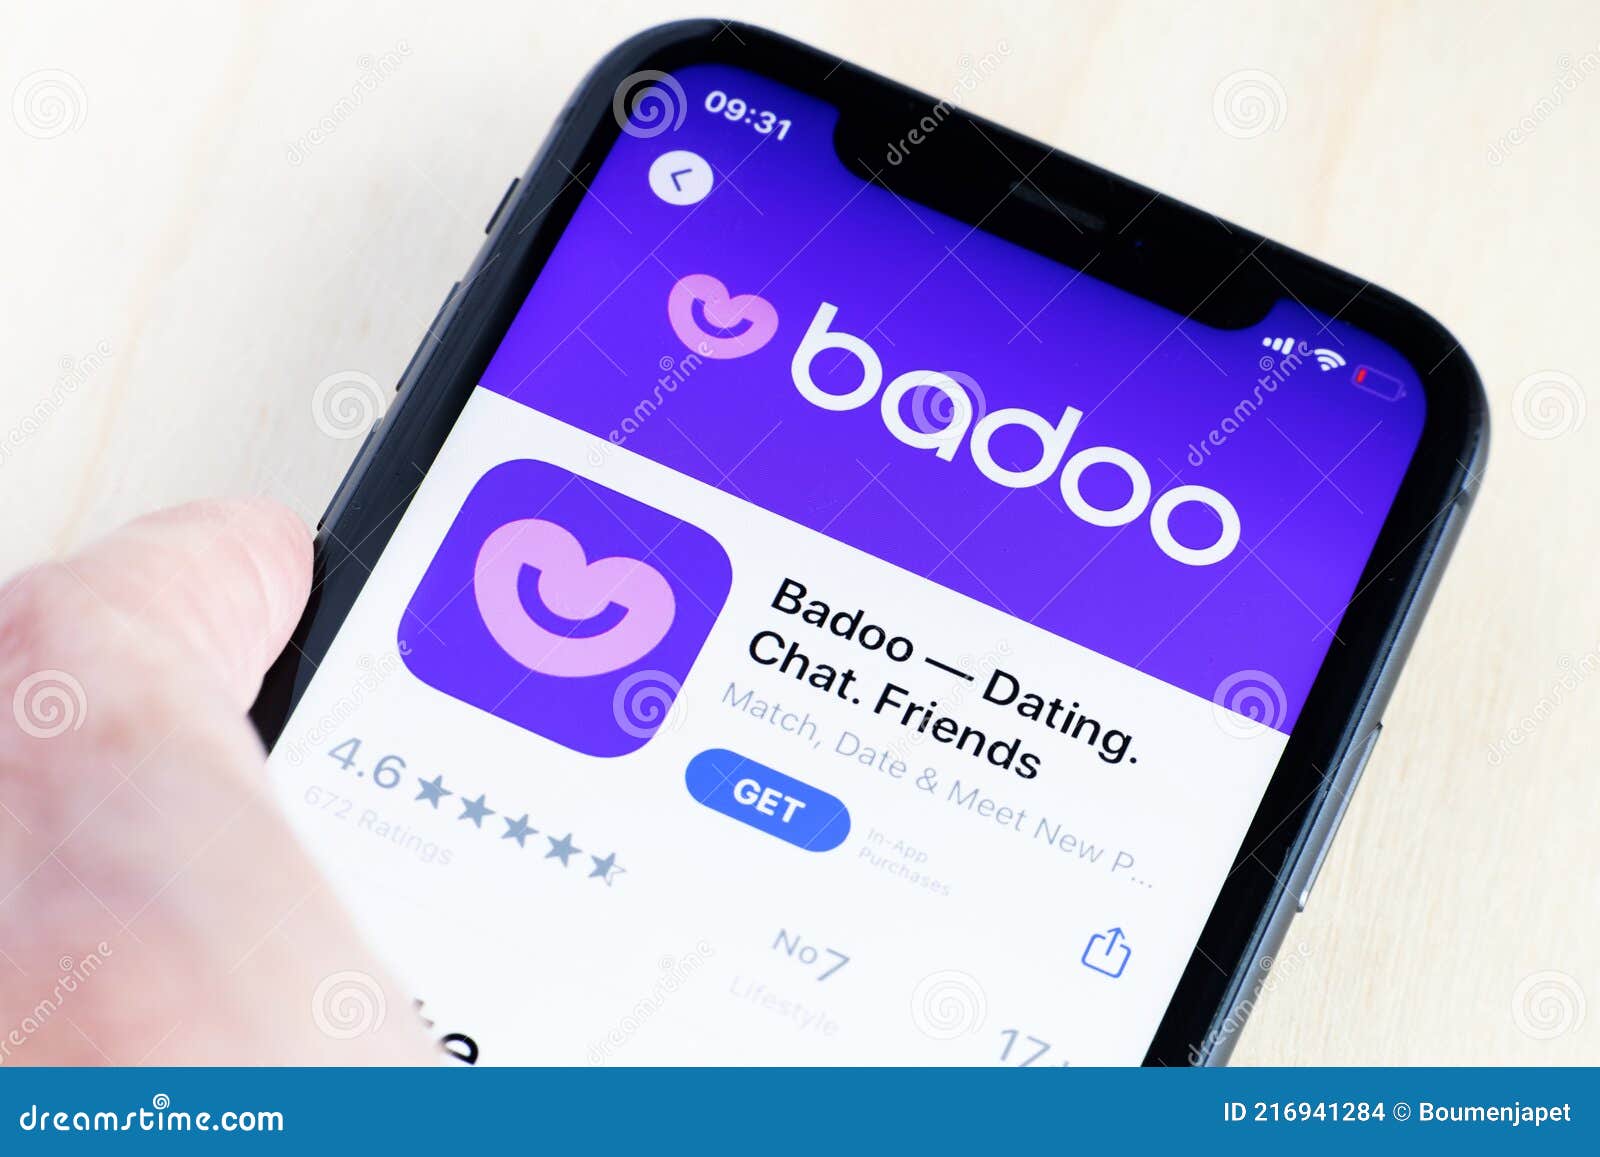 Badoo feels like chatting